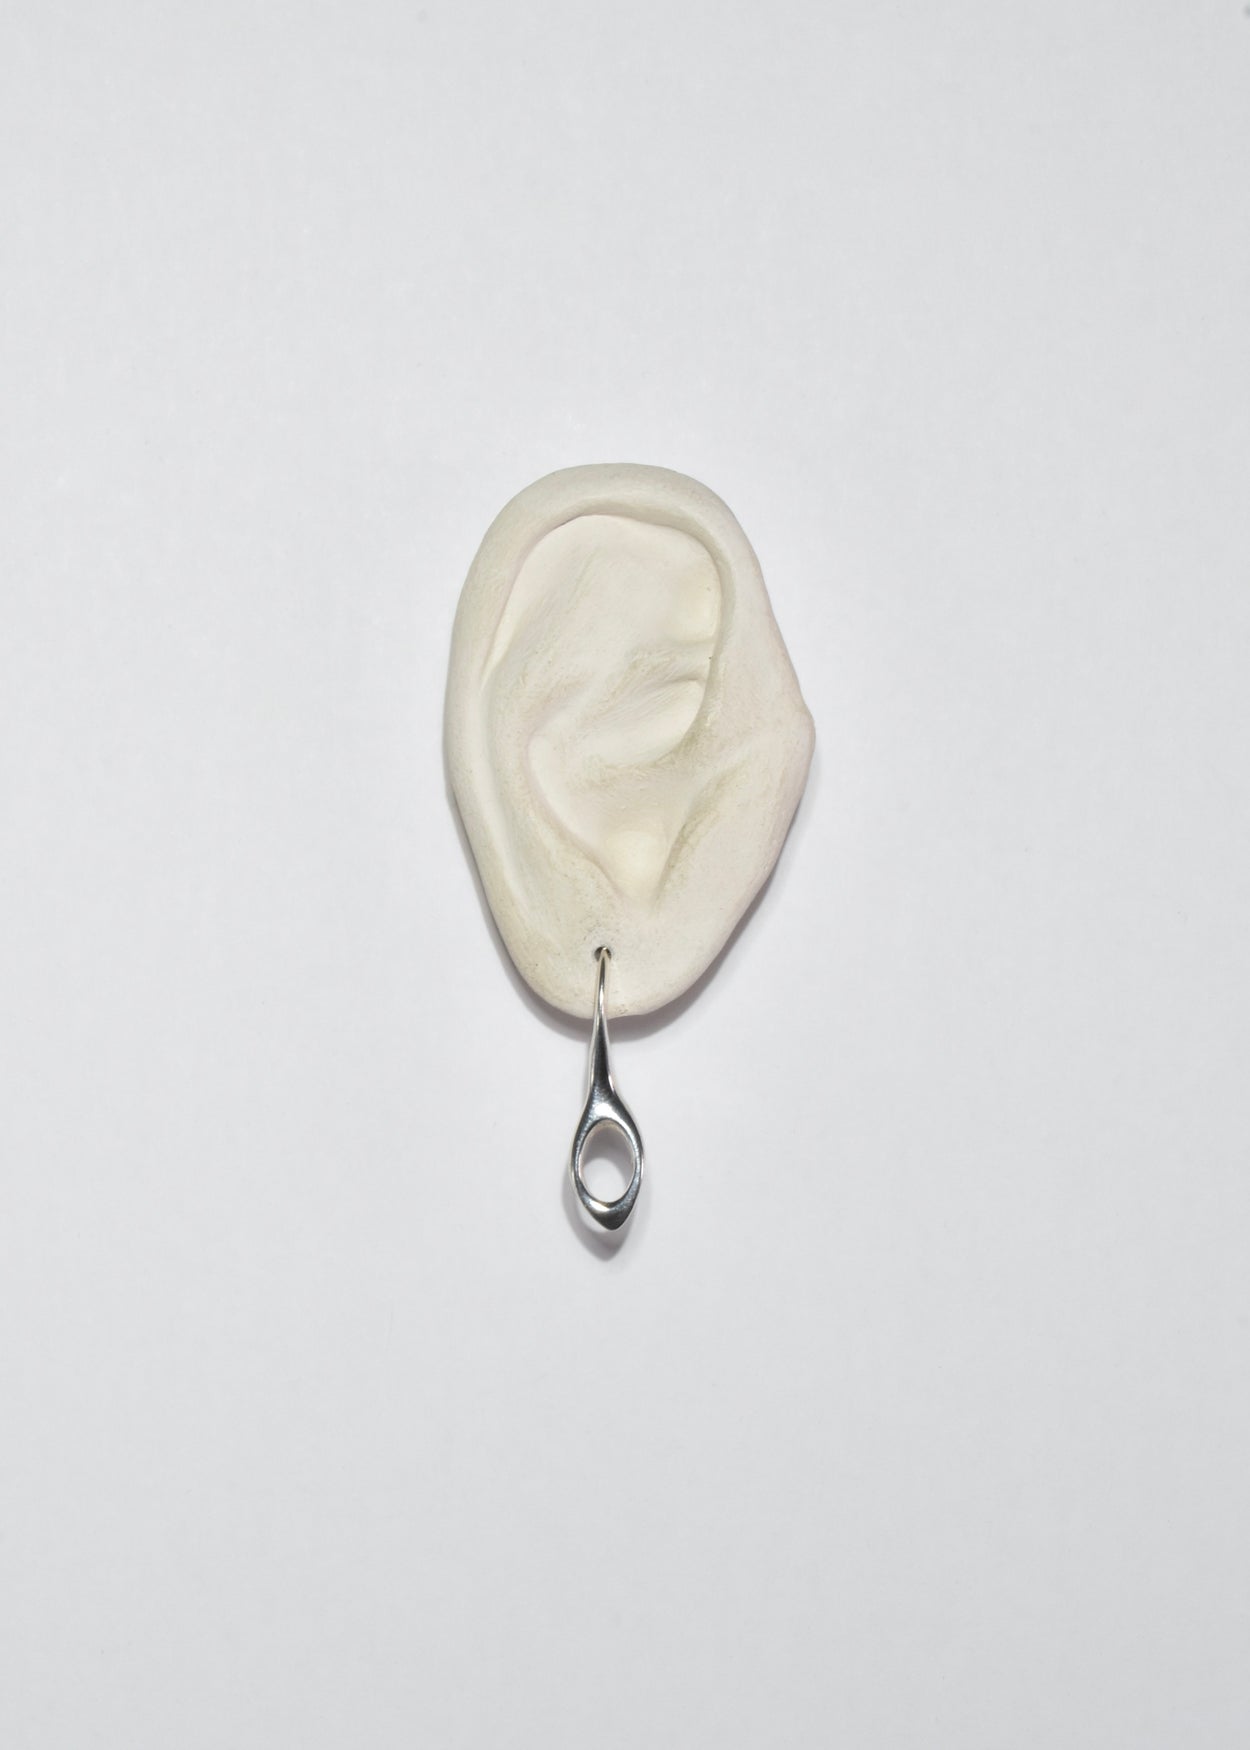 Sculptural Silver Earrings